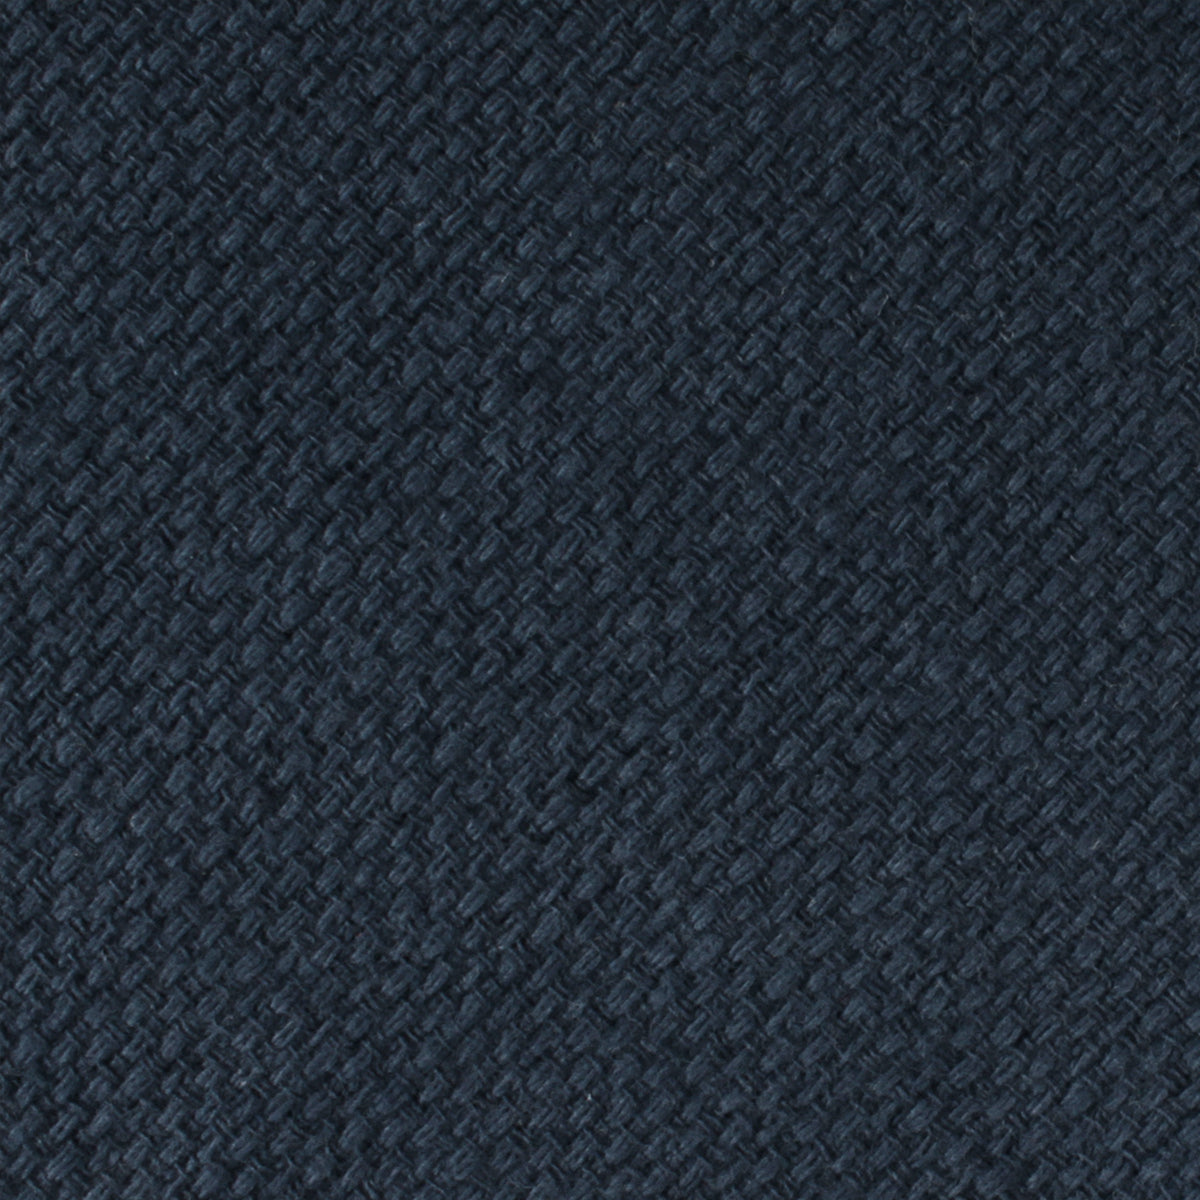 Navy Blue Basket Weave Linen Self Bow Tie Fabric